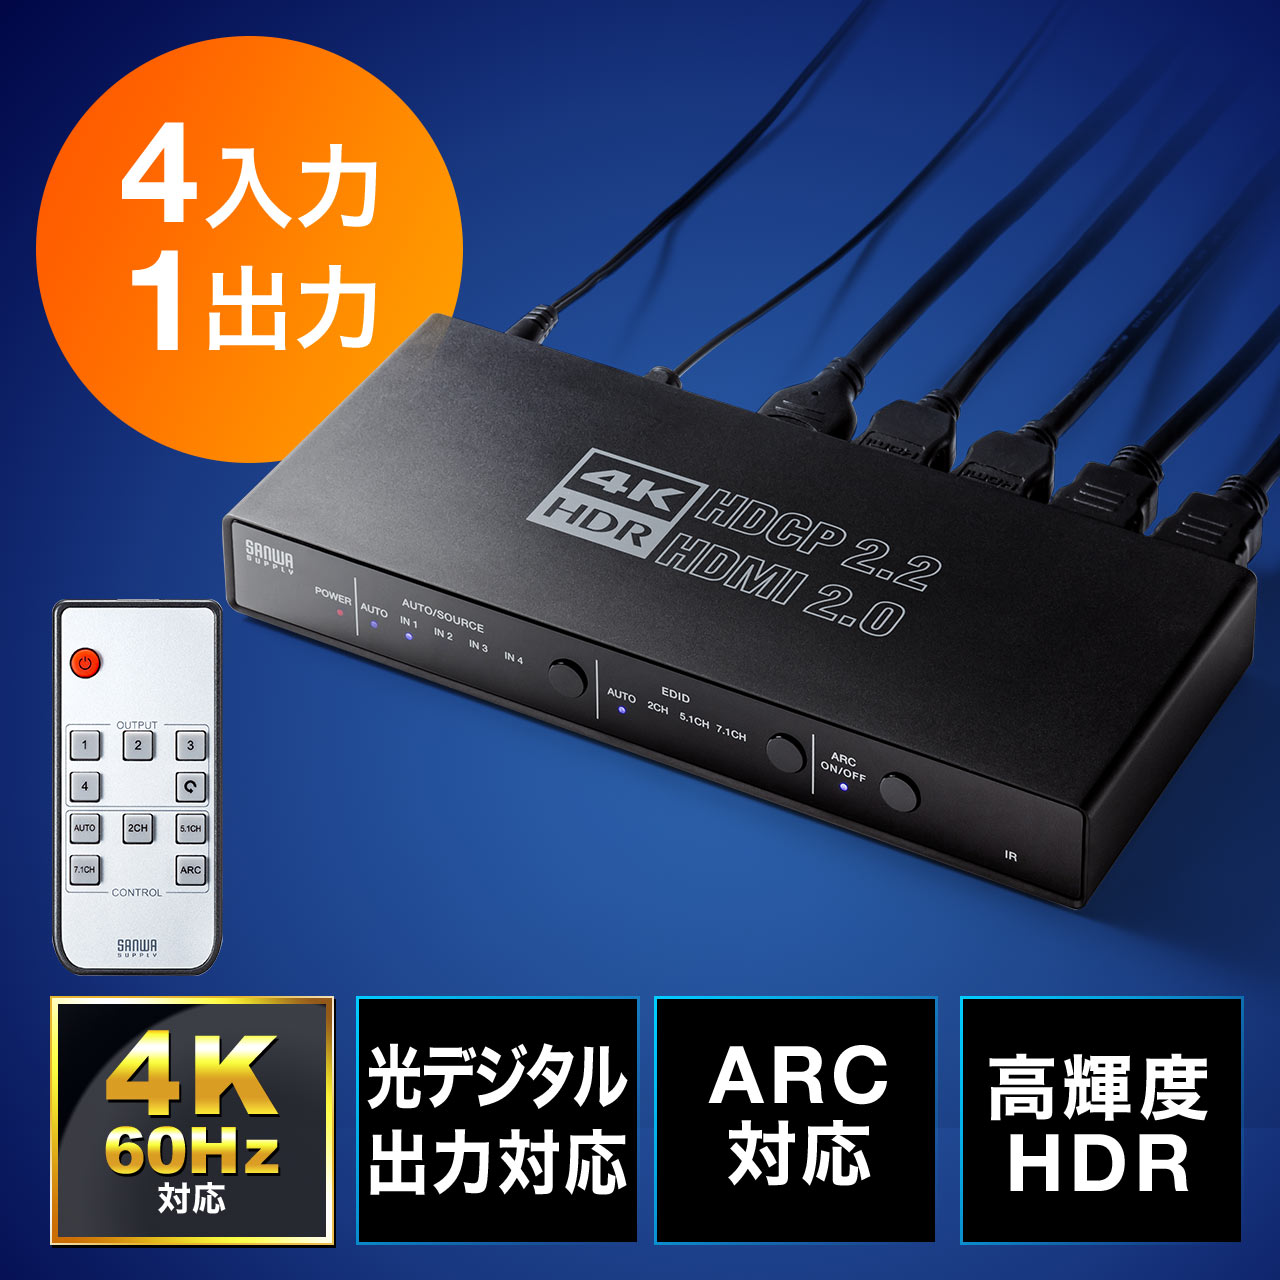 HDMI切替器 4K/60Hz HDR対応 4入力1出力 光デジタル 同軸デジタル端子 ARC対応 HDMIセレクター PS5対応 400-SW033